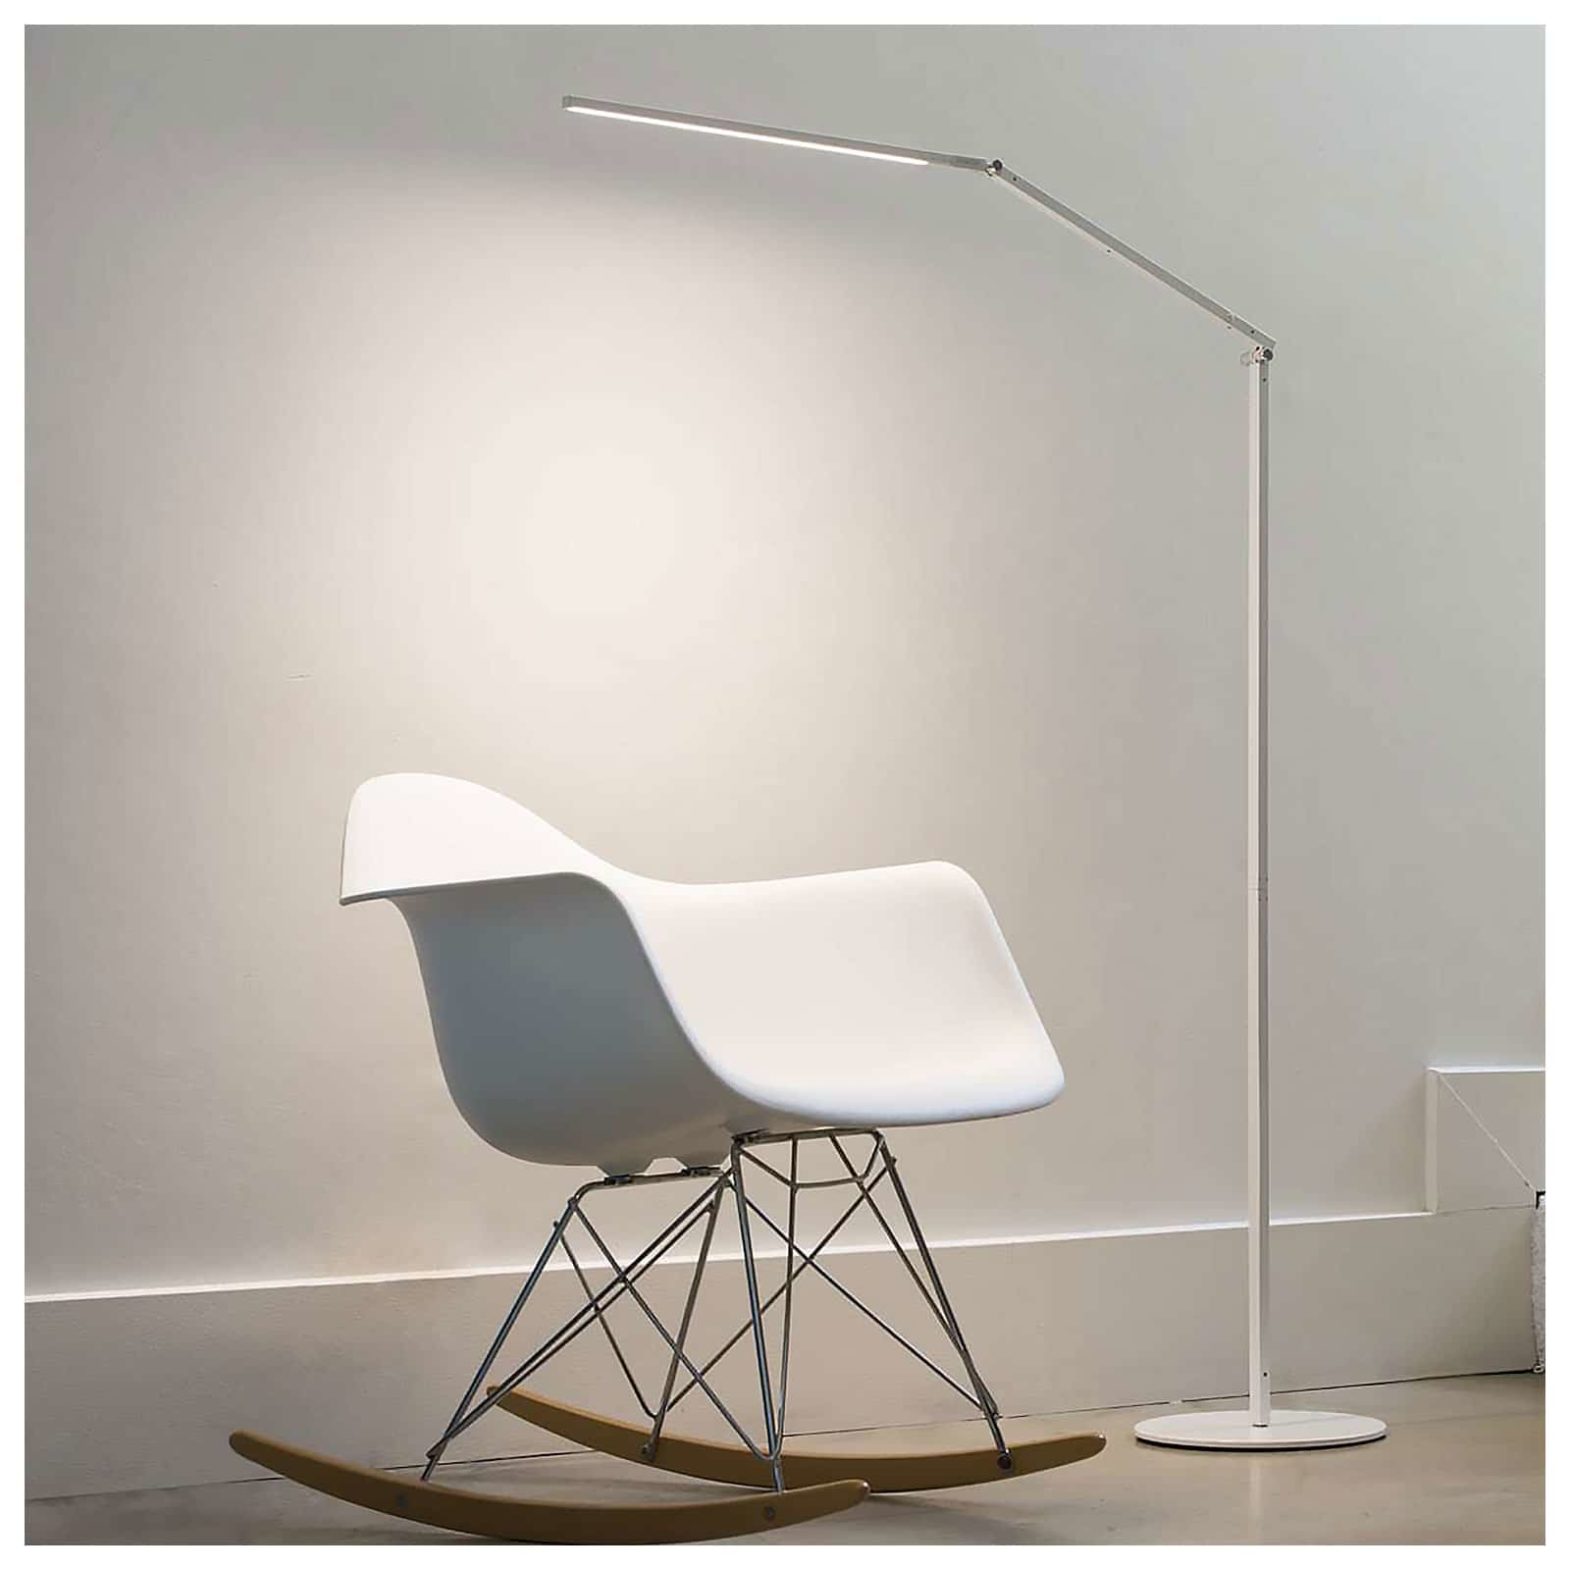 Koncept Z-Bar white Desk Lamp: Illuminating Elegance and Efficiency